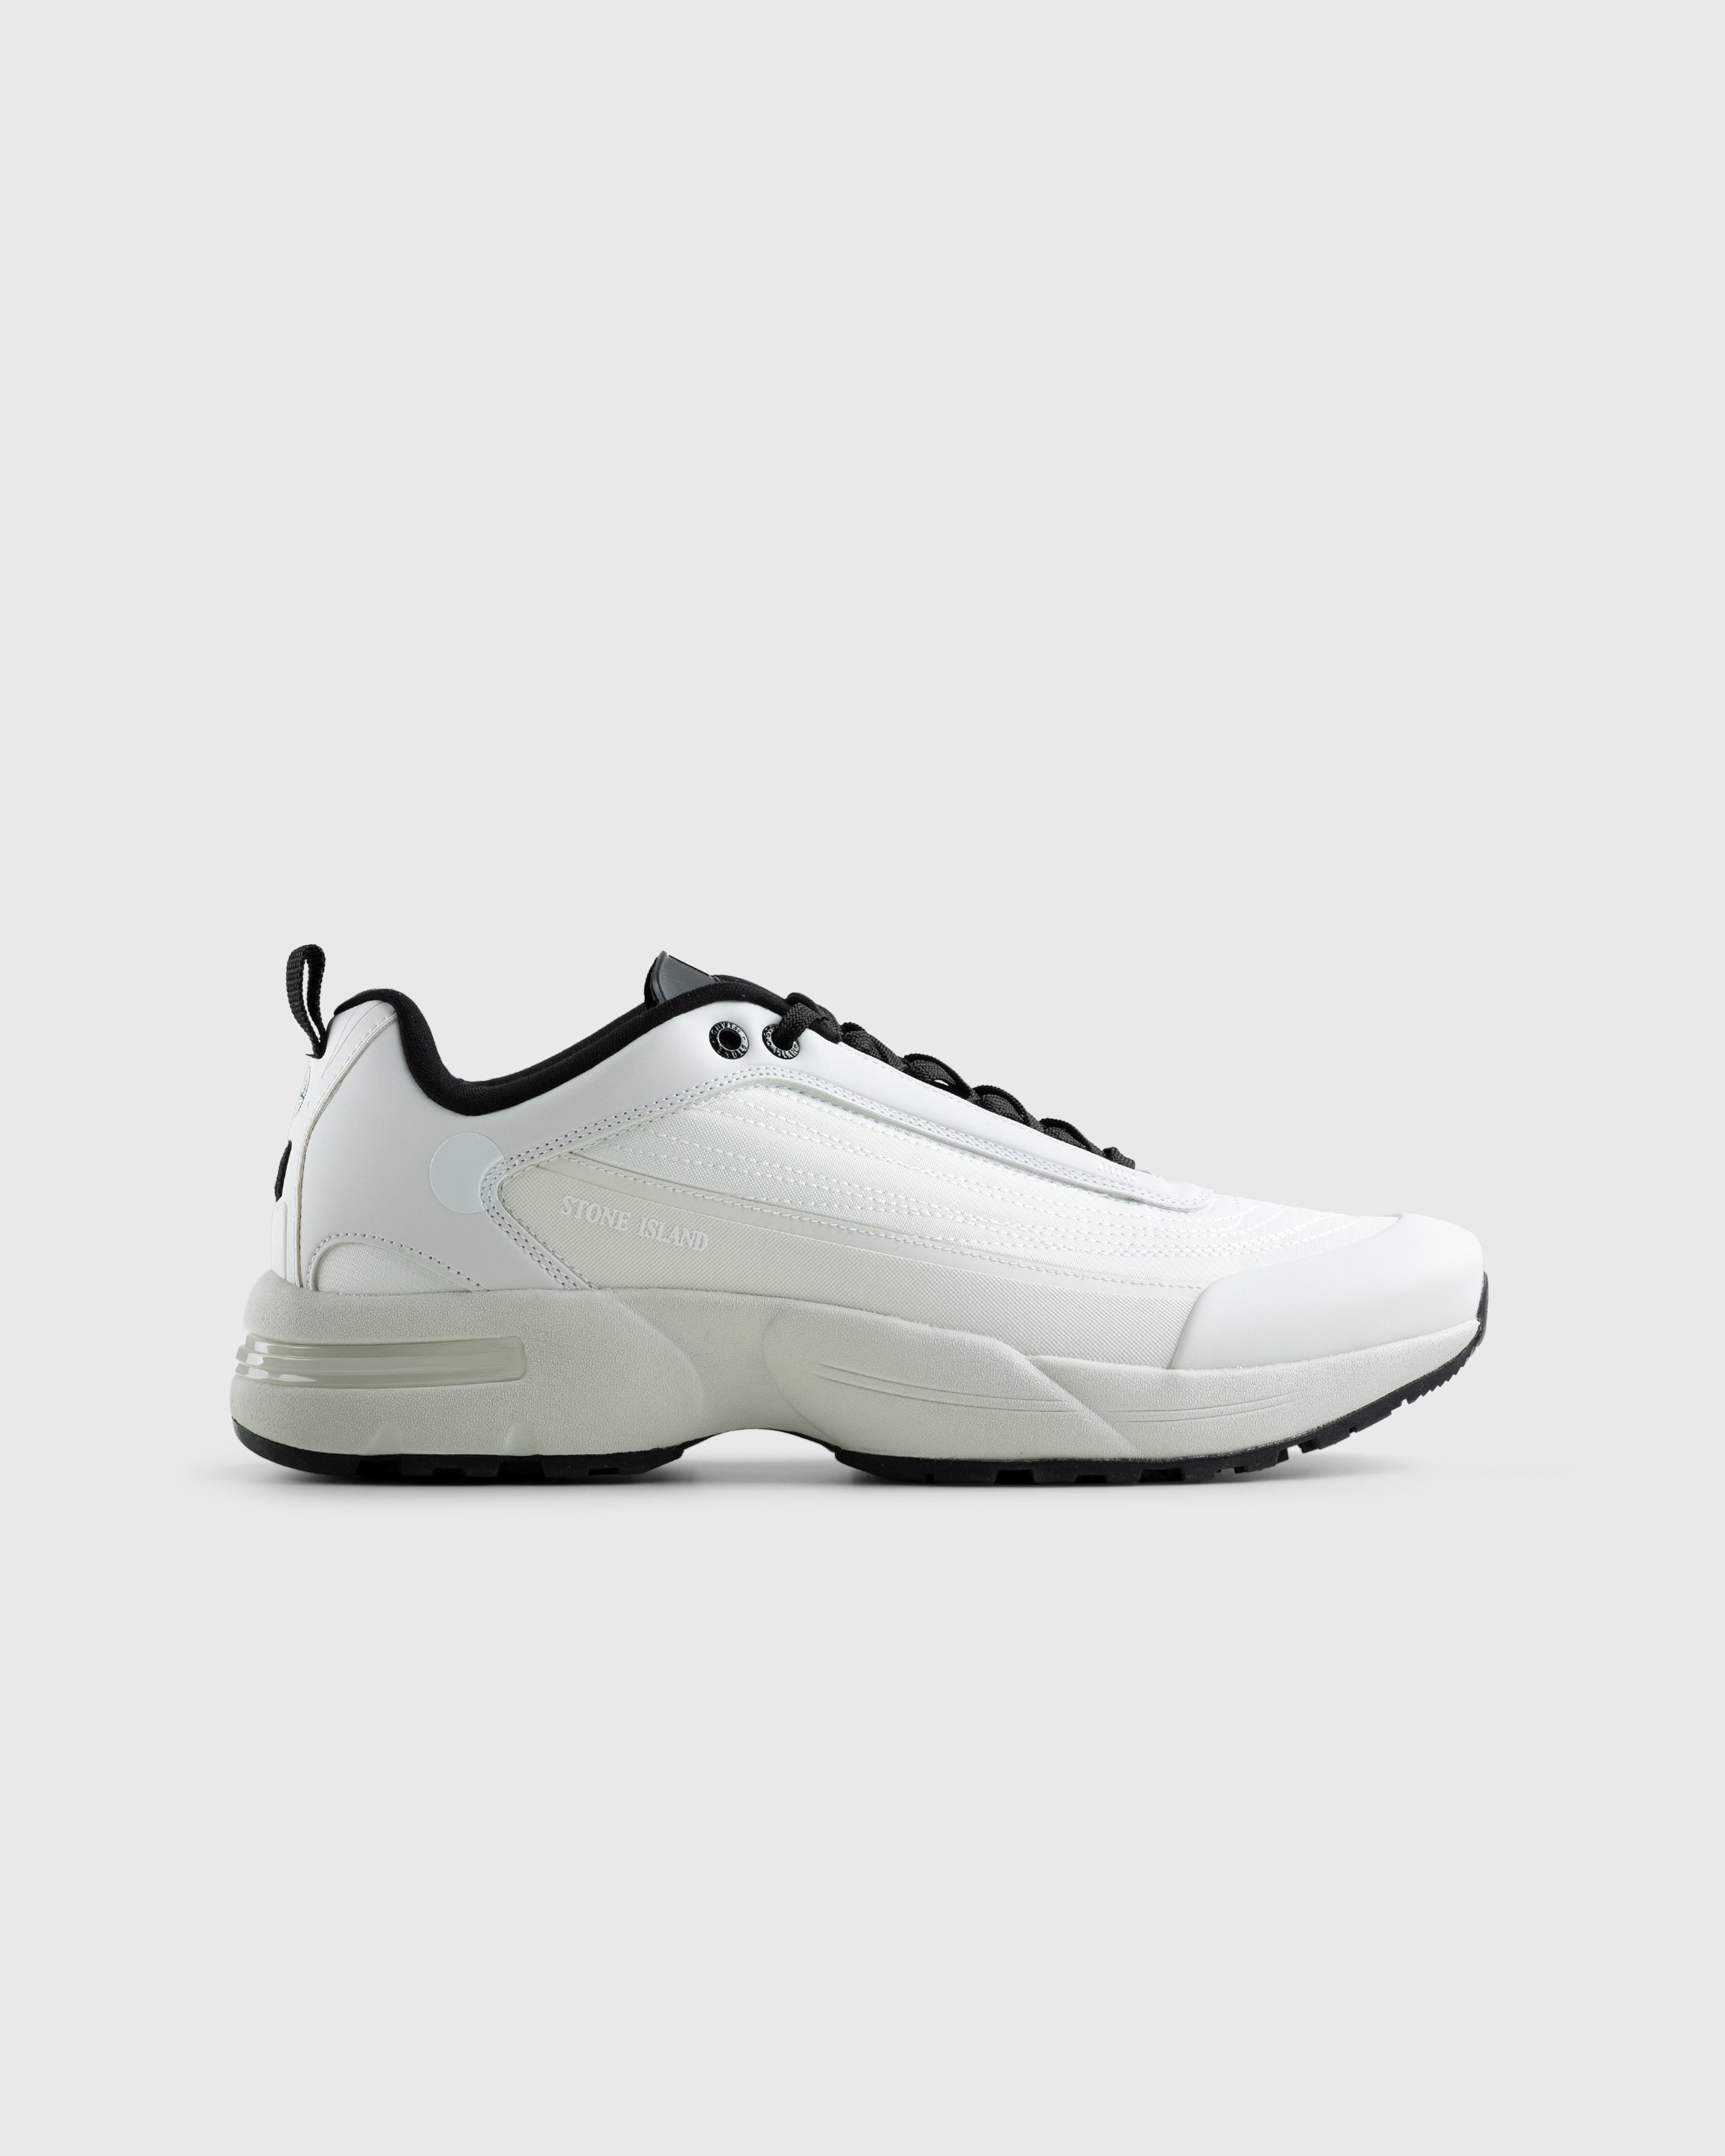 Stone Island - Grime Sneaker White - Footwear - White - Image 1